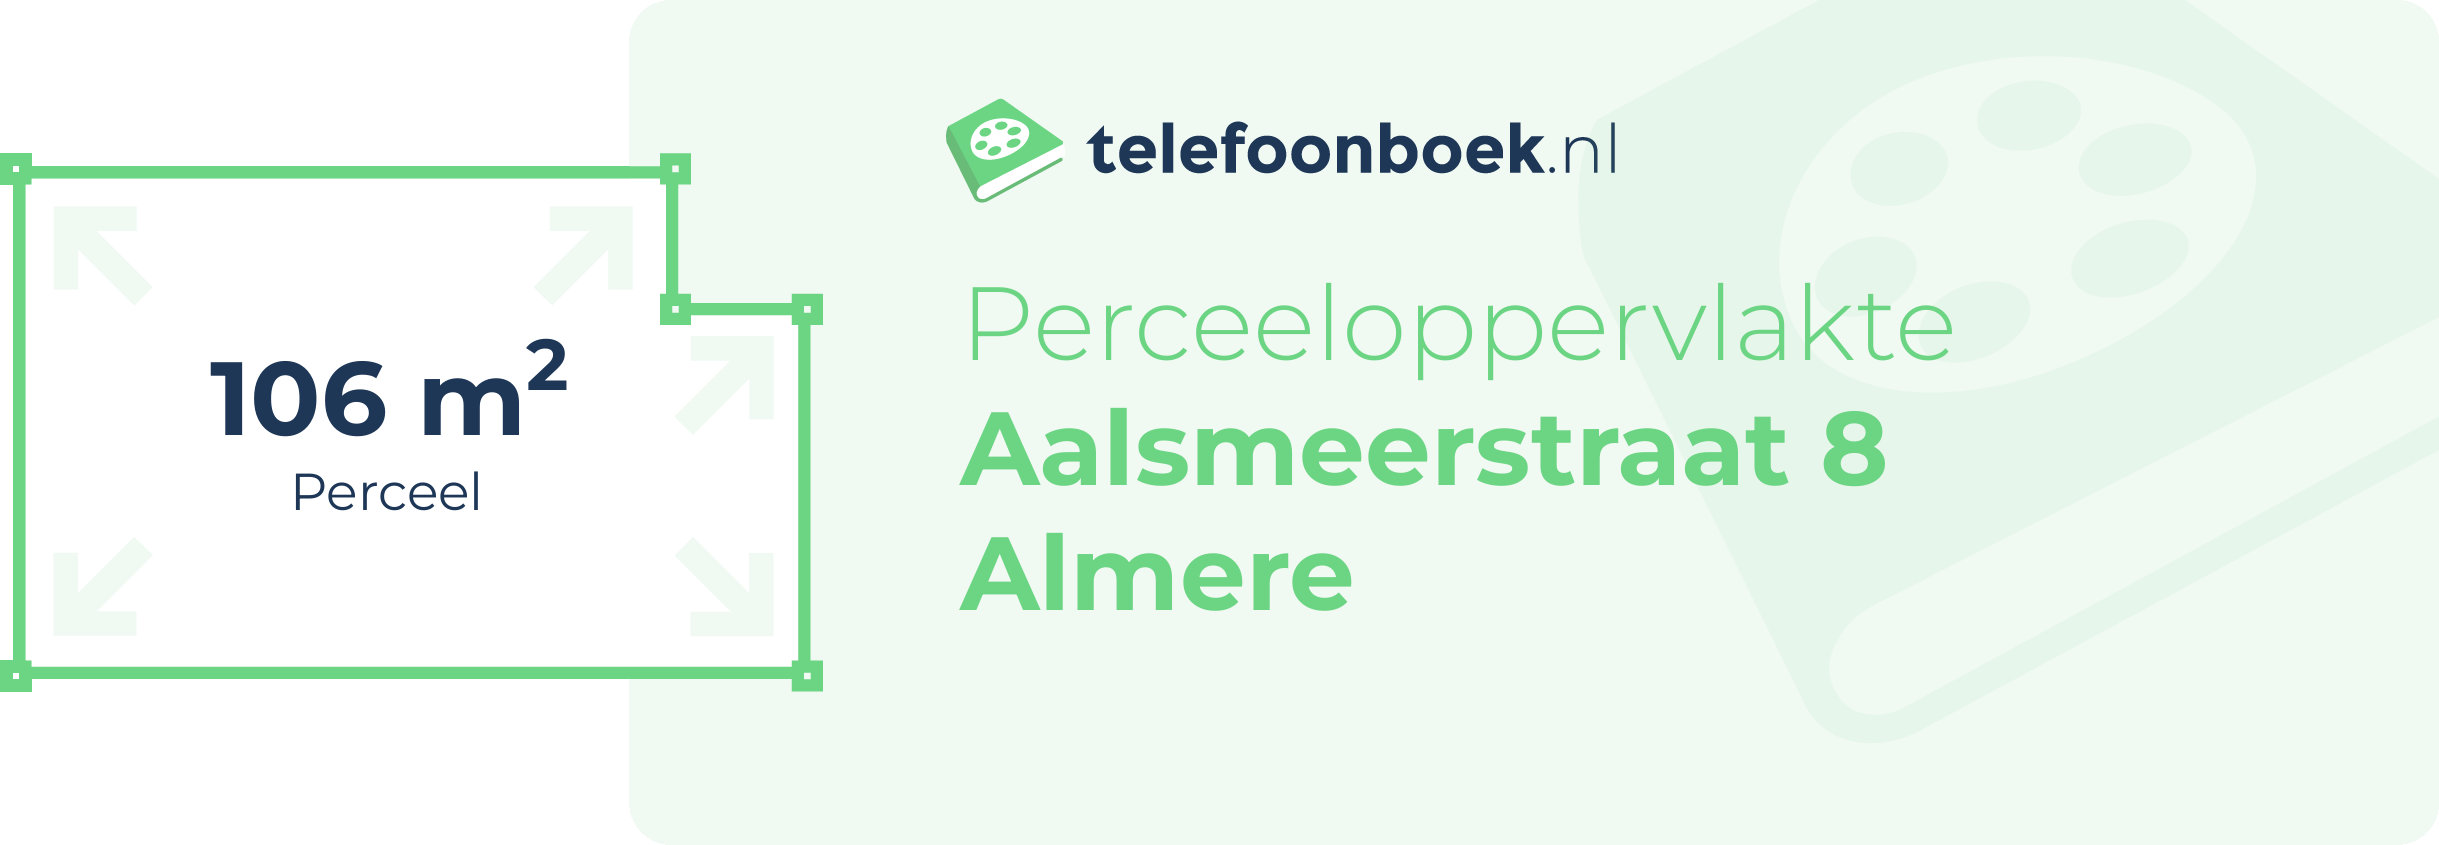 Perceeloppervlakte Aalsmeerstraat 8 Almere